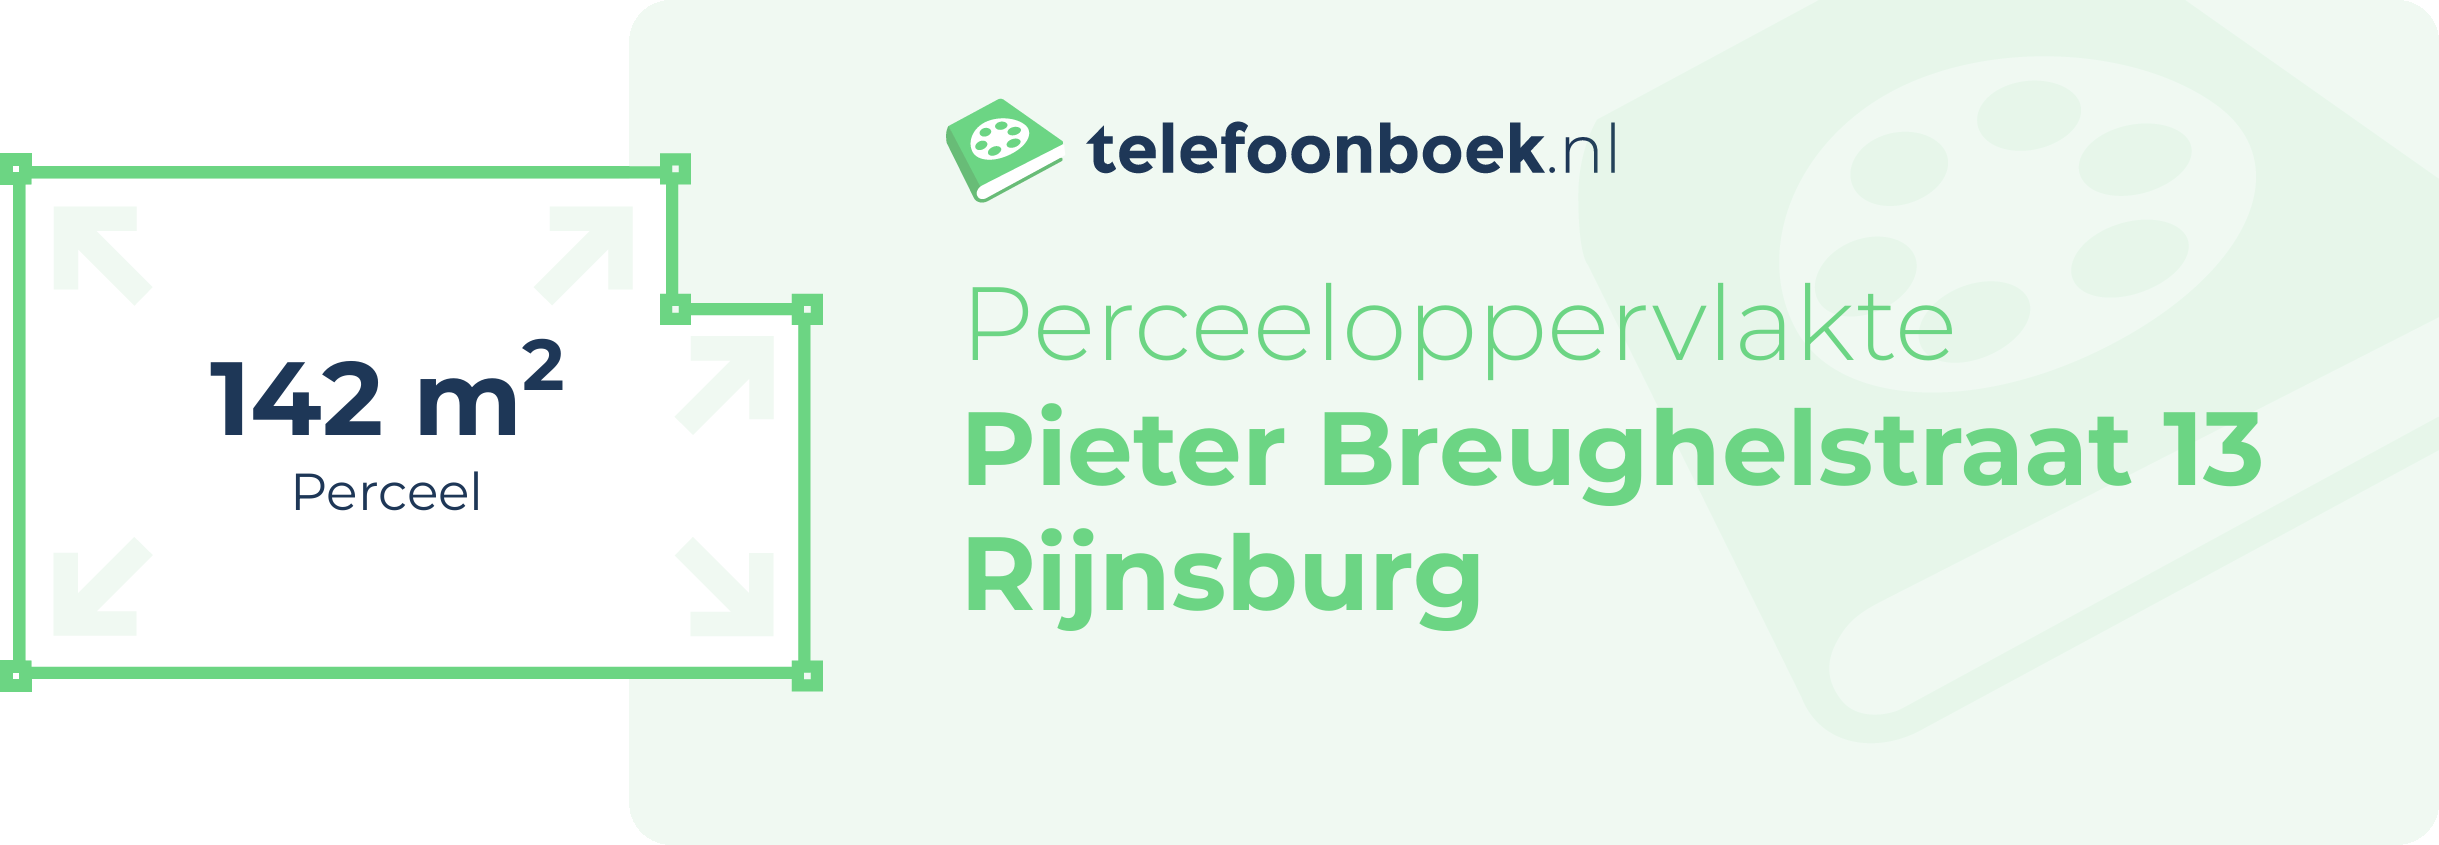 Perceeloppervlakte Pieter Breughelstraat 13 Rijnsburg